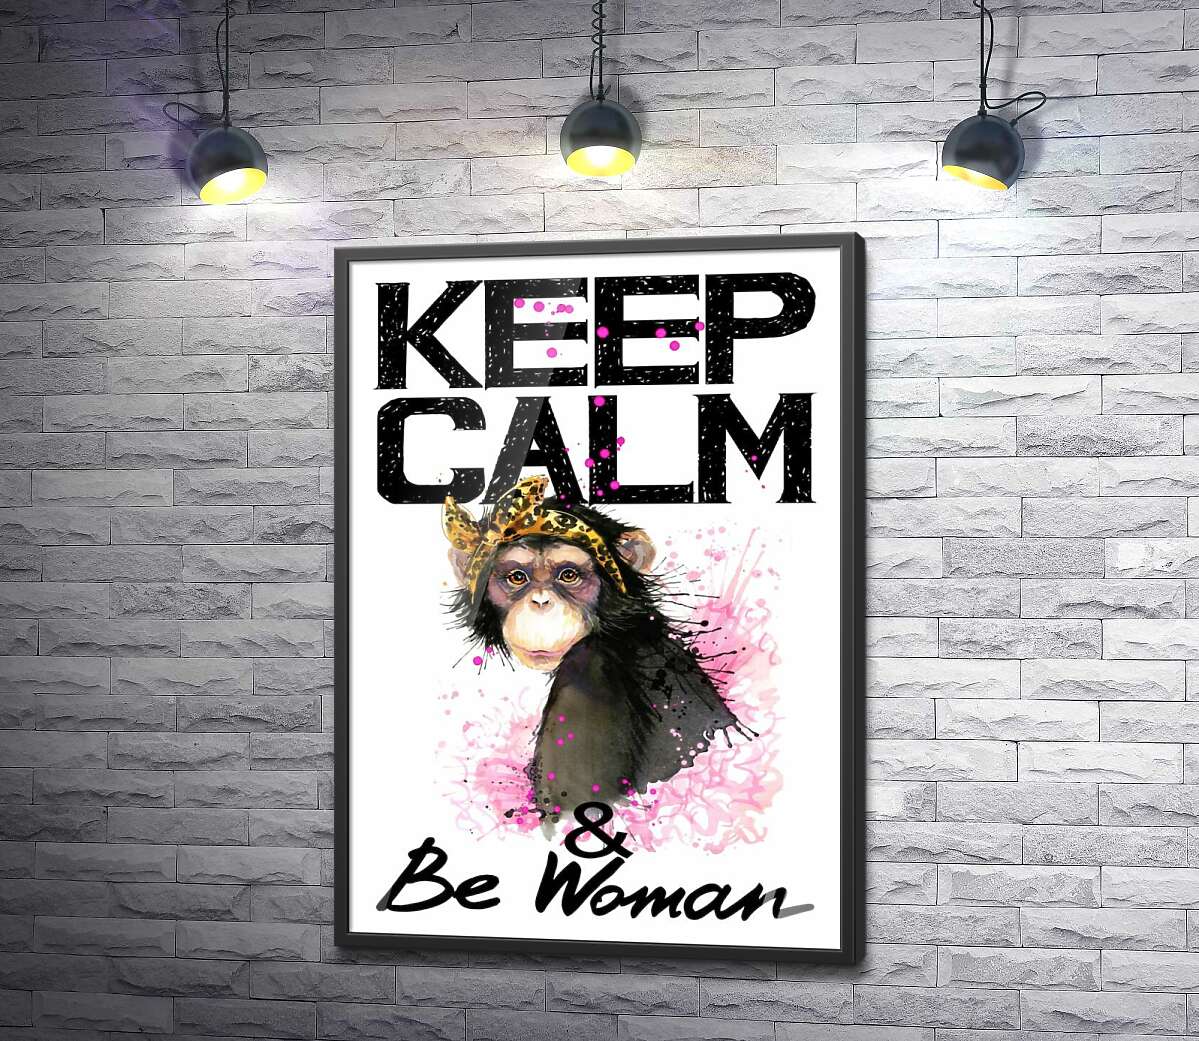 постер Гламурная обезьяна среди надписи "keep calm and be woman"